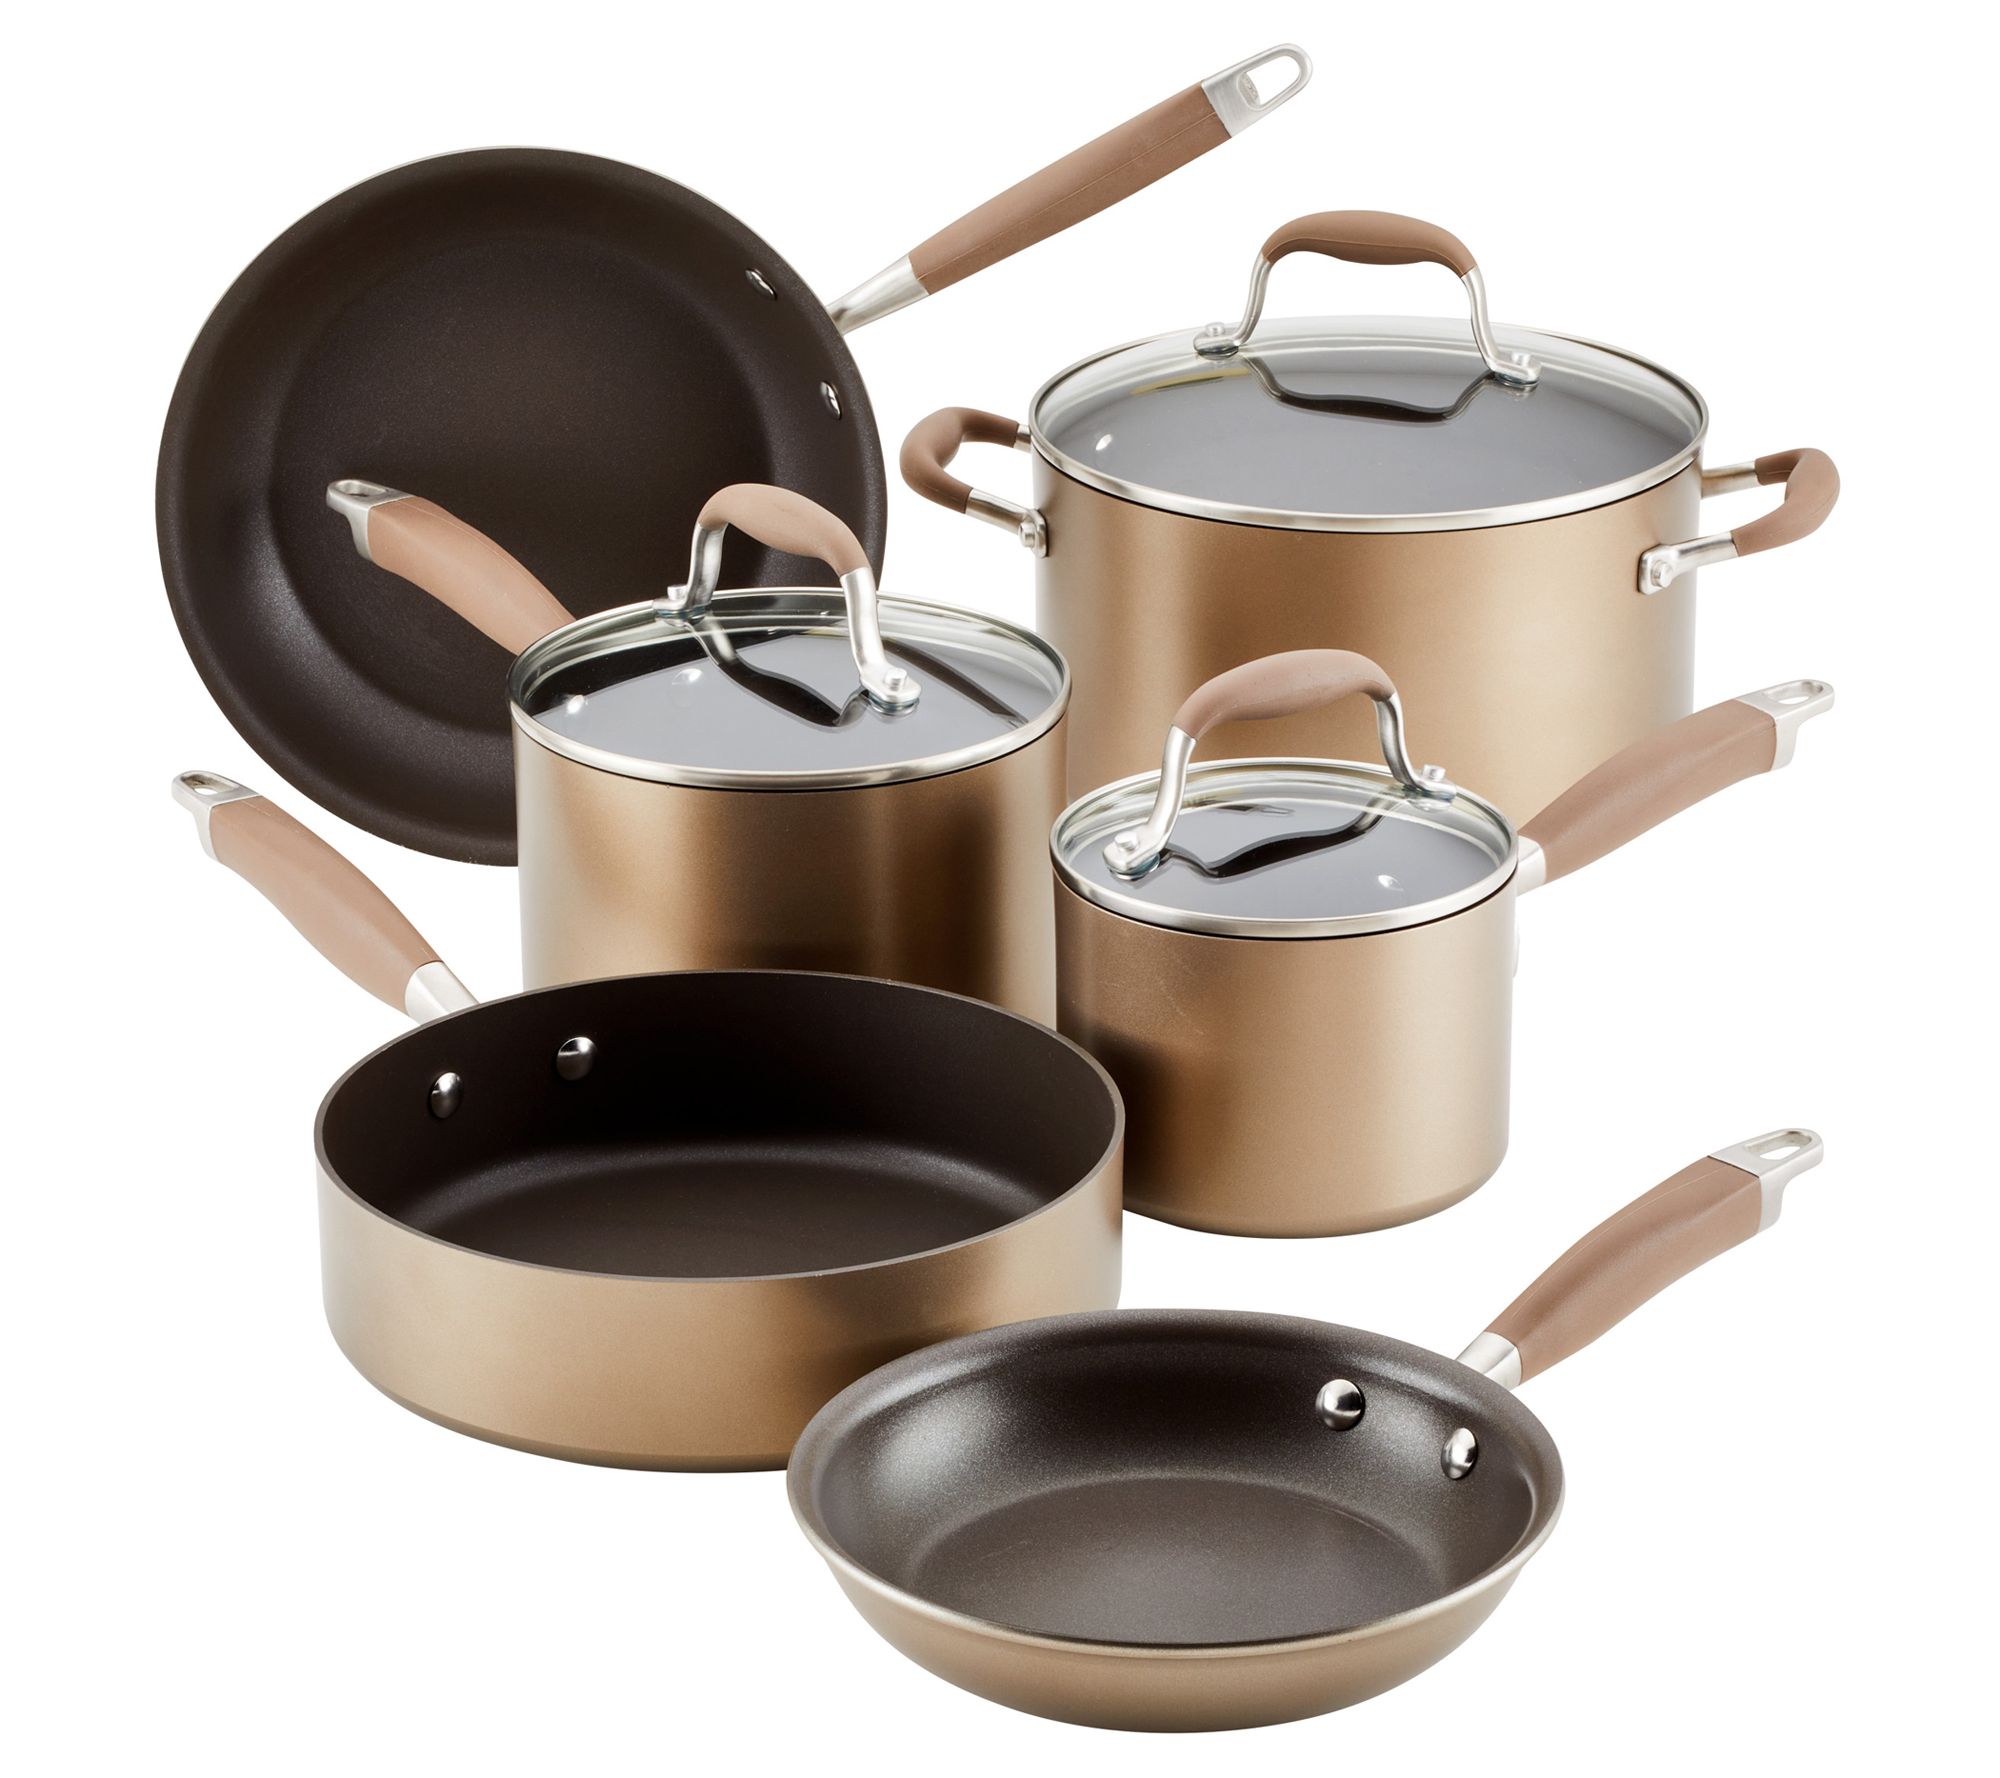 Anolon X Hybrid Nonstick Aluminum Nonstick Cookware Induction Pots And Pans  Set, 12 Piece, Dark Gray